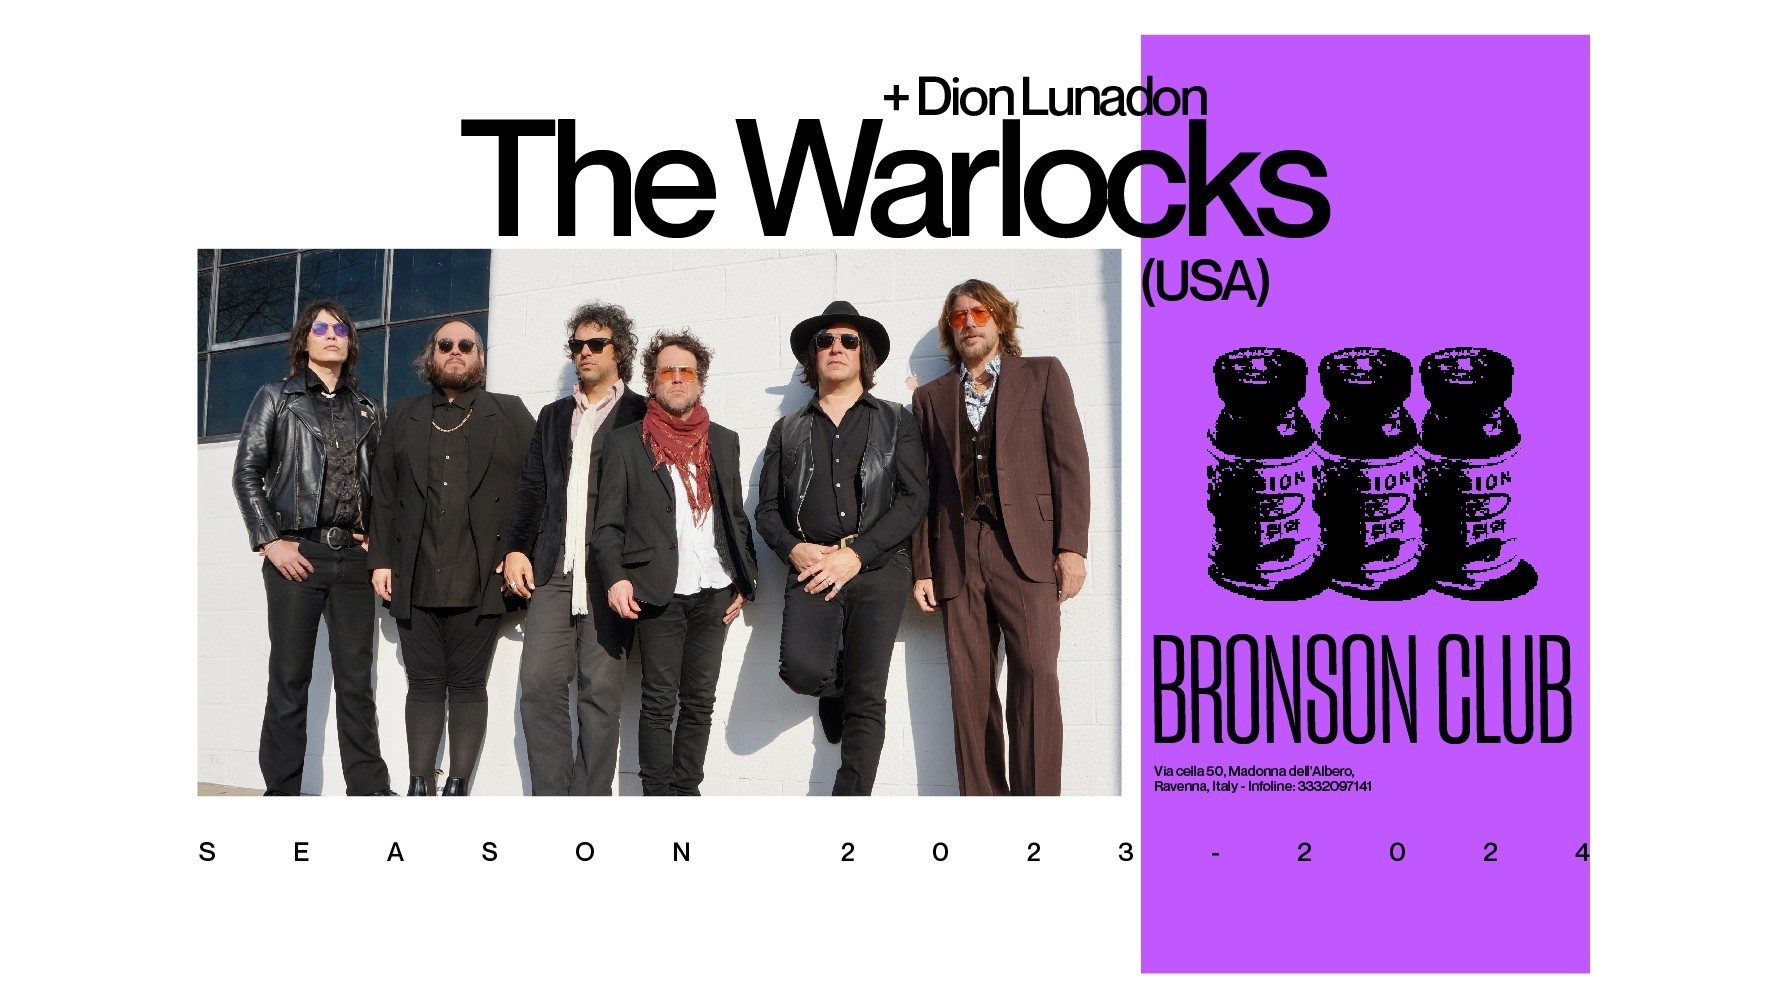 The Warlocks + Dion Lunadon